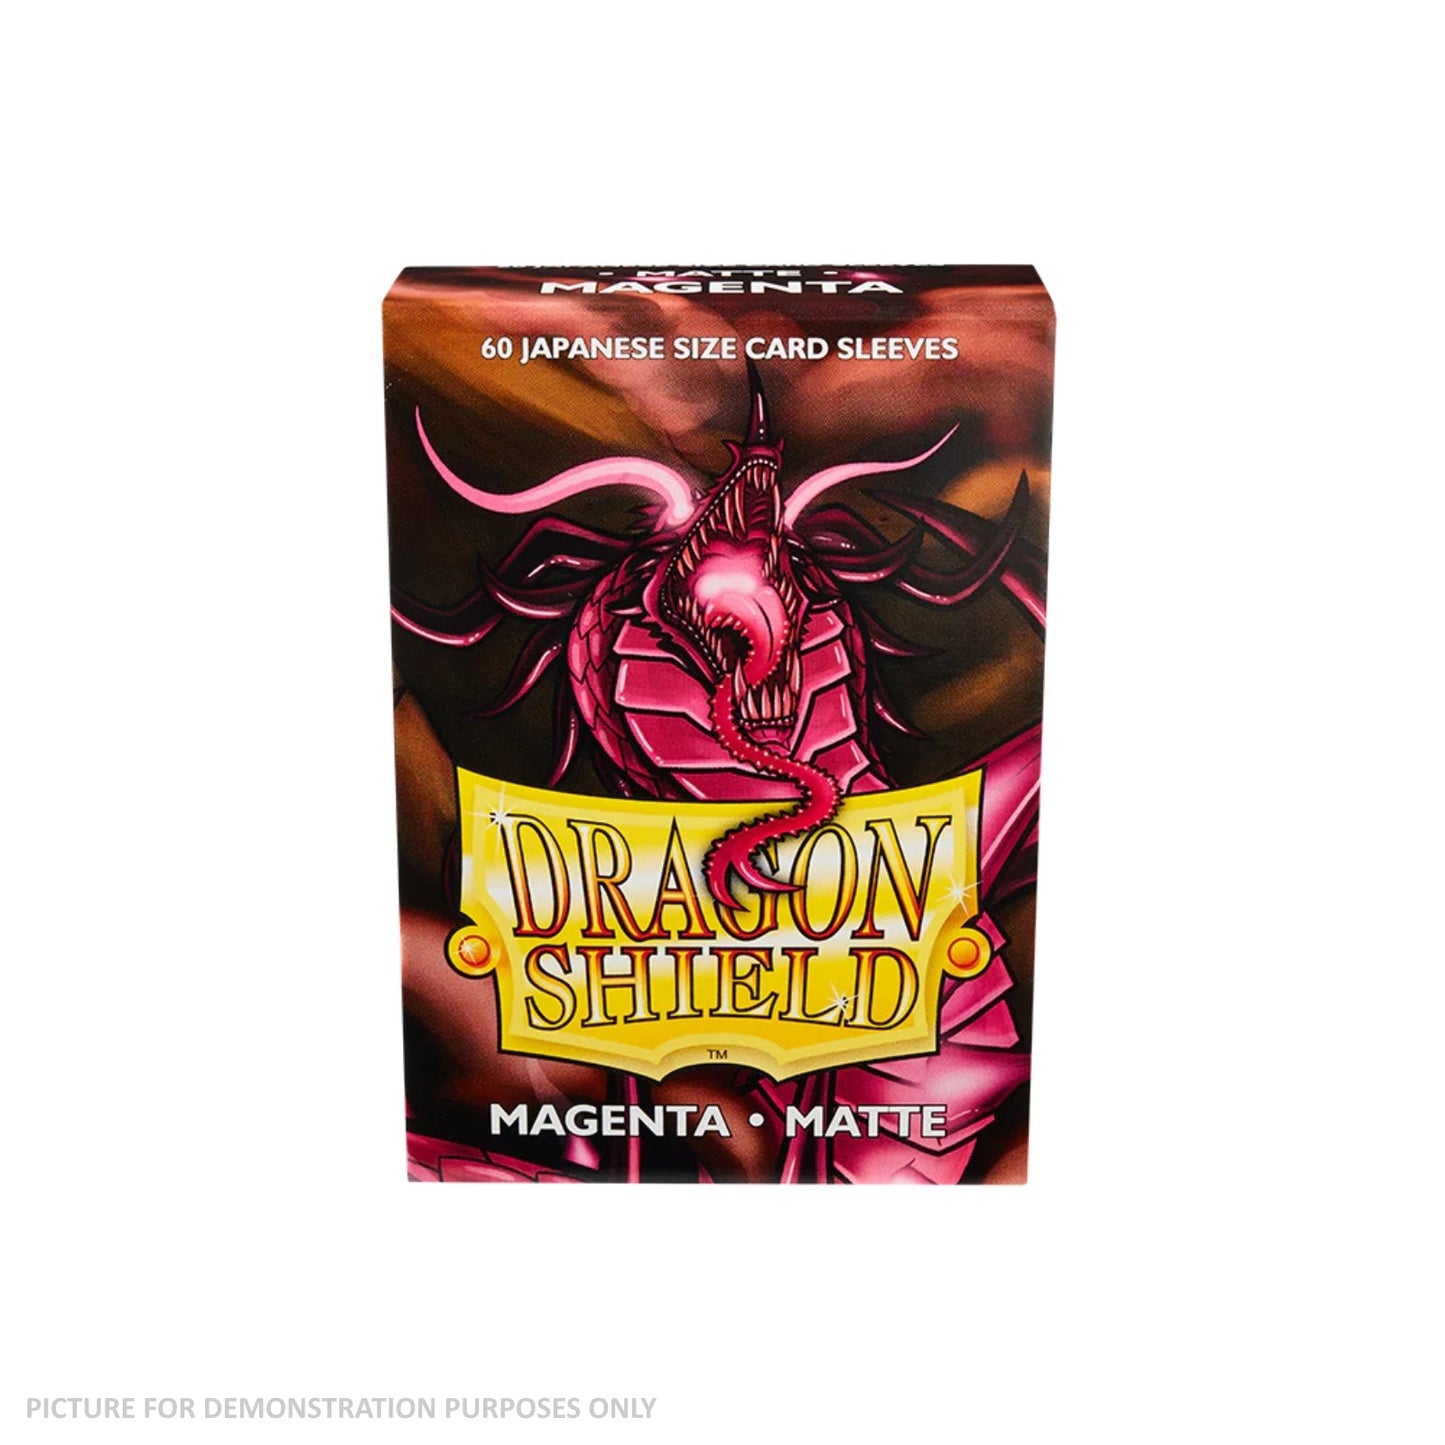 Dragon Shield 60 Japanese Size Card Sleeves - Matte Magenta